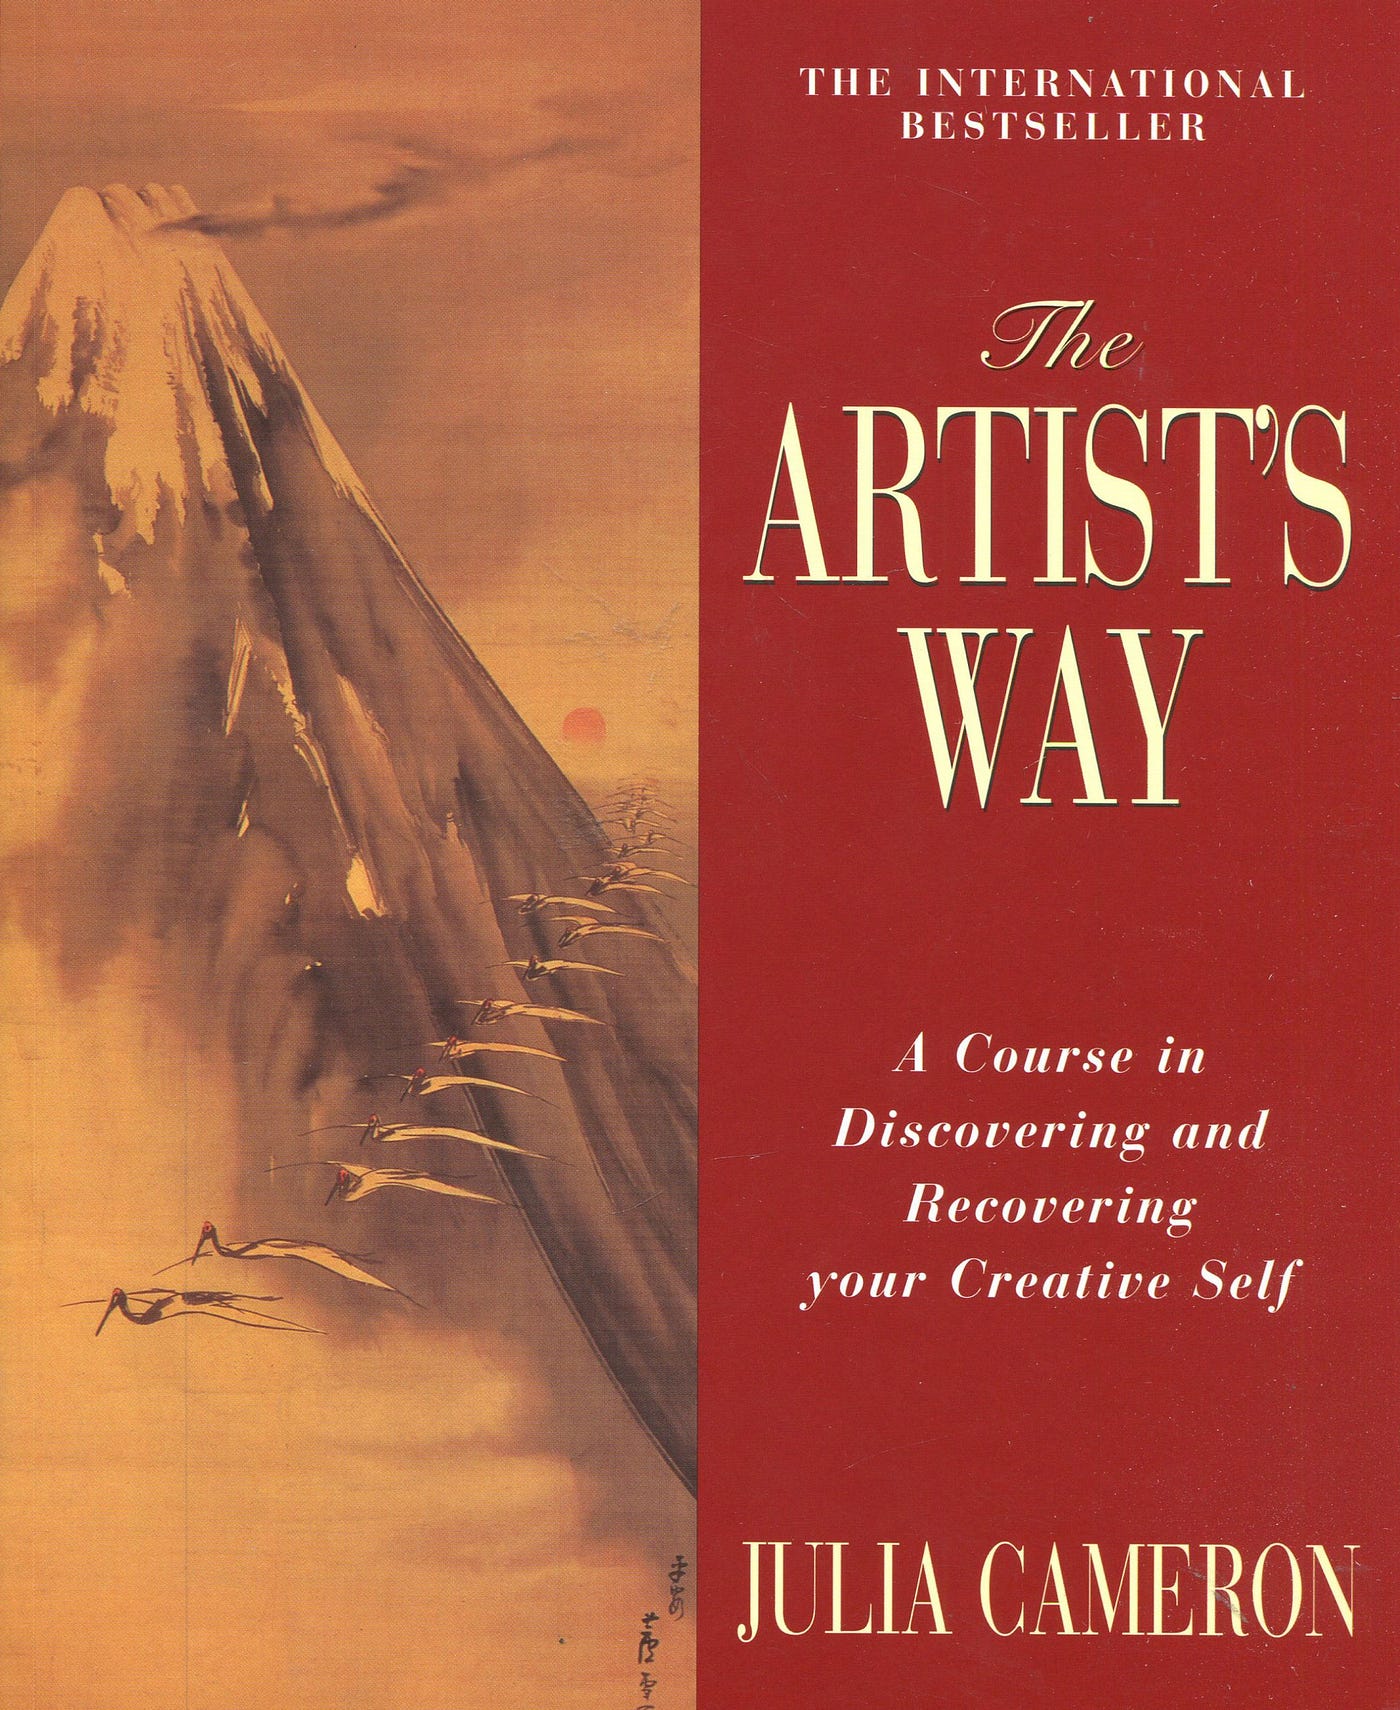 The Artist's Way, 5 Key Points, Julia Cameron